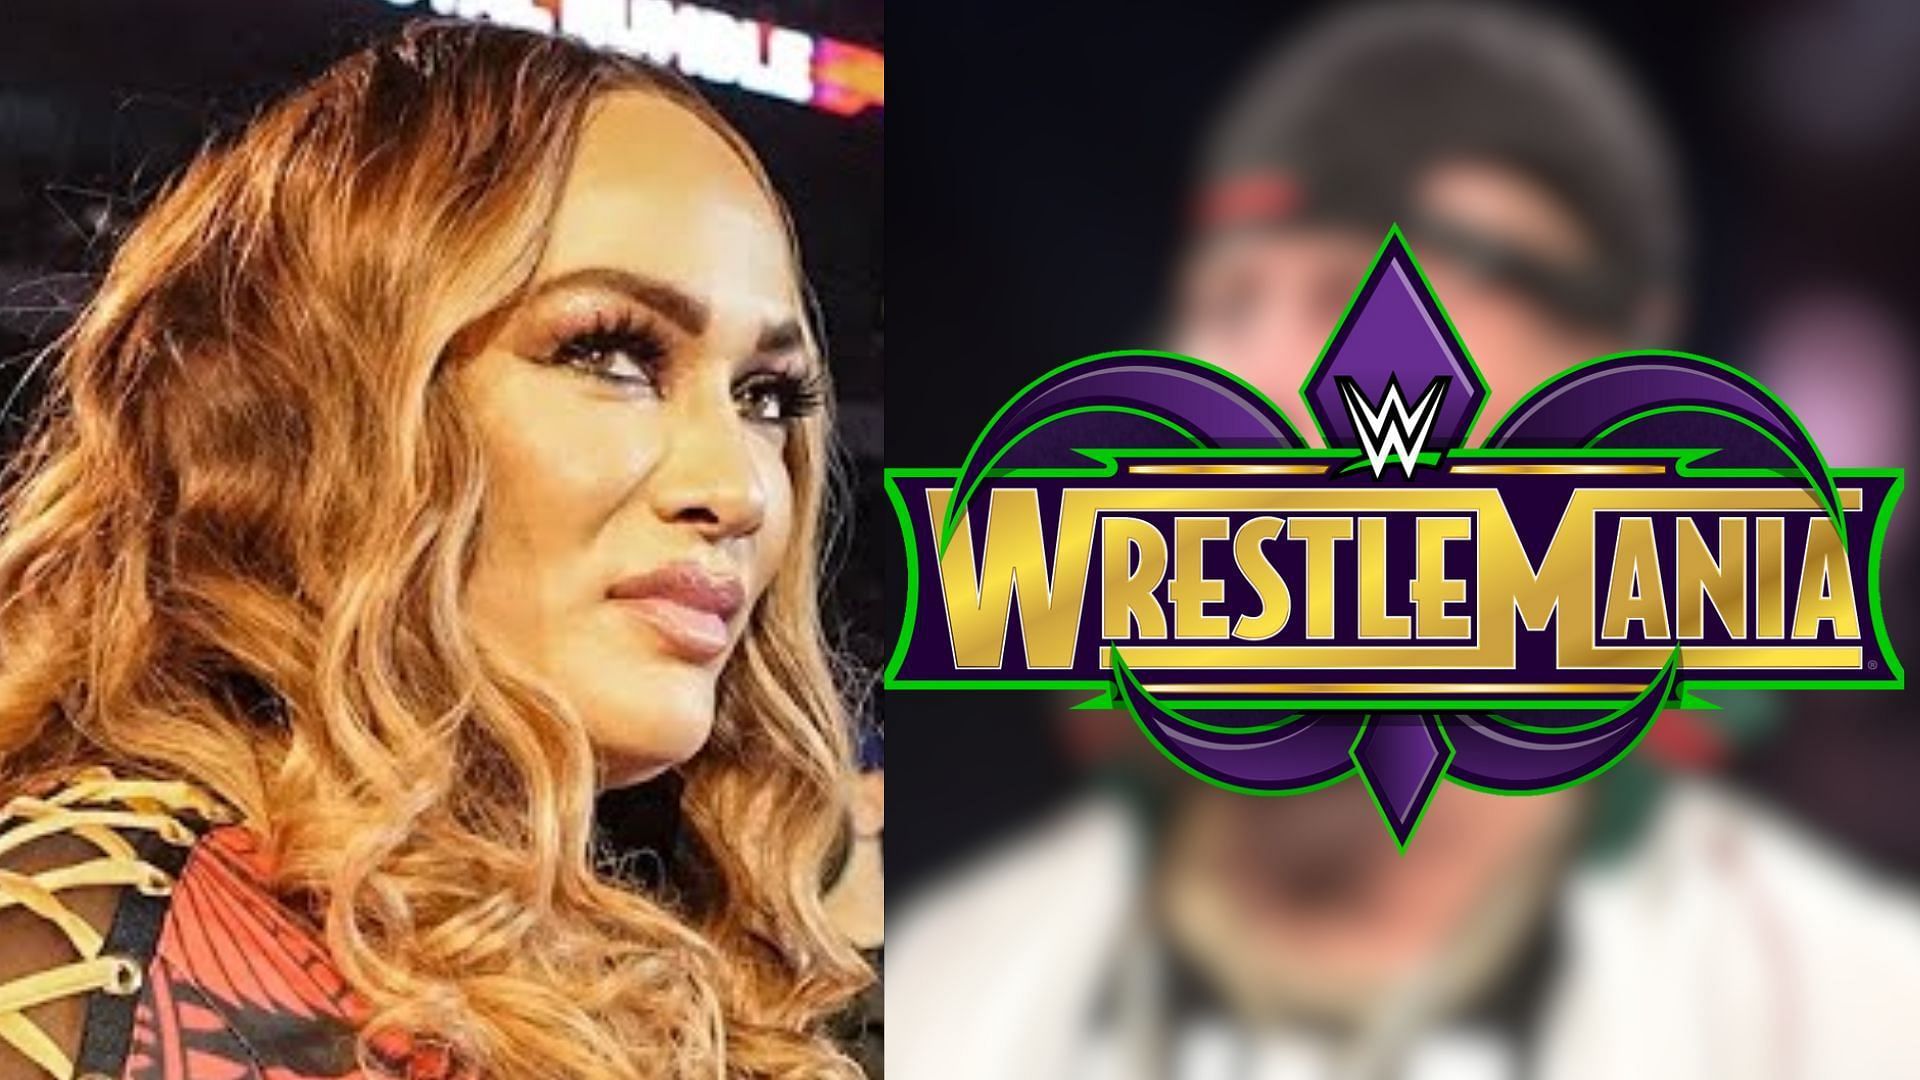 Nia Jax became WWE RAW Women